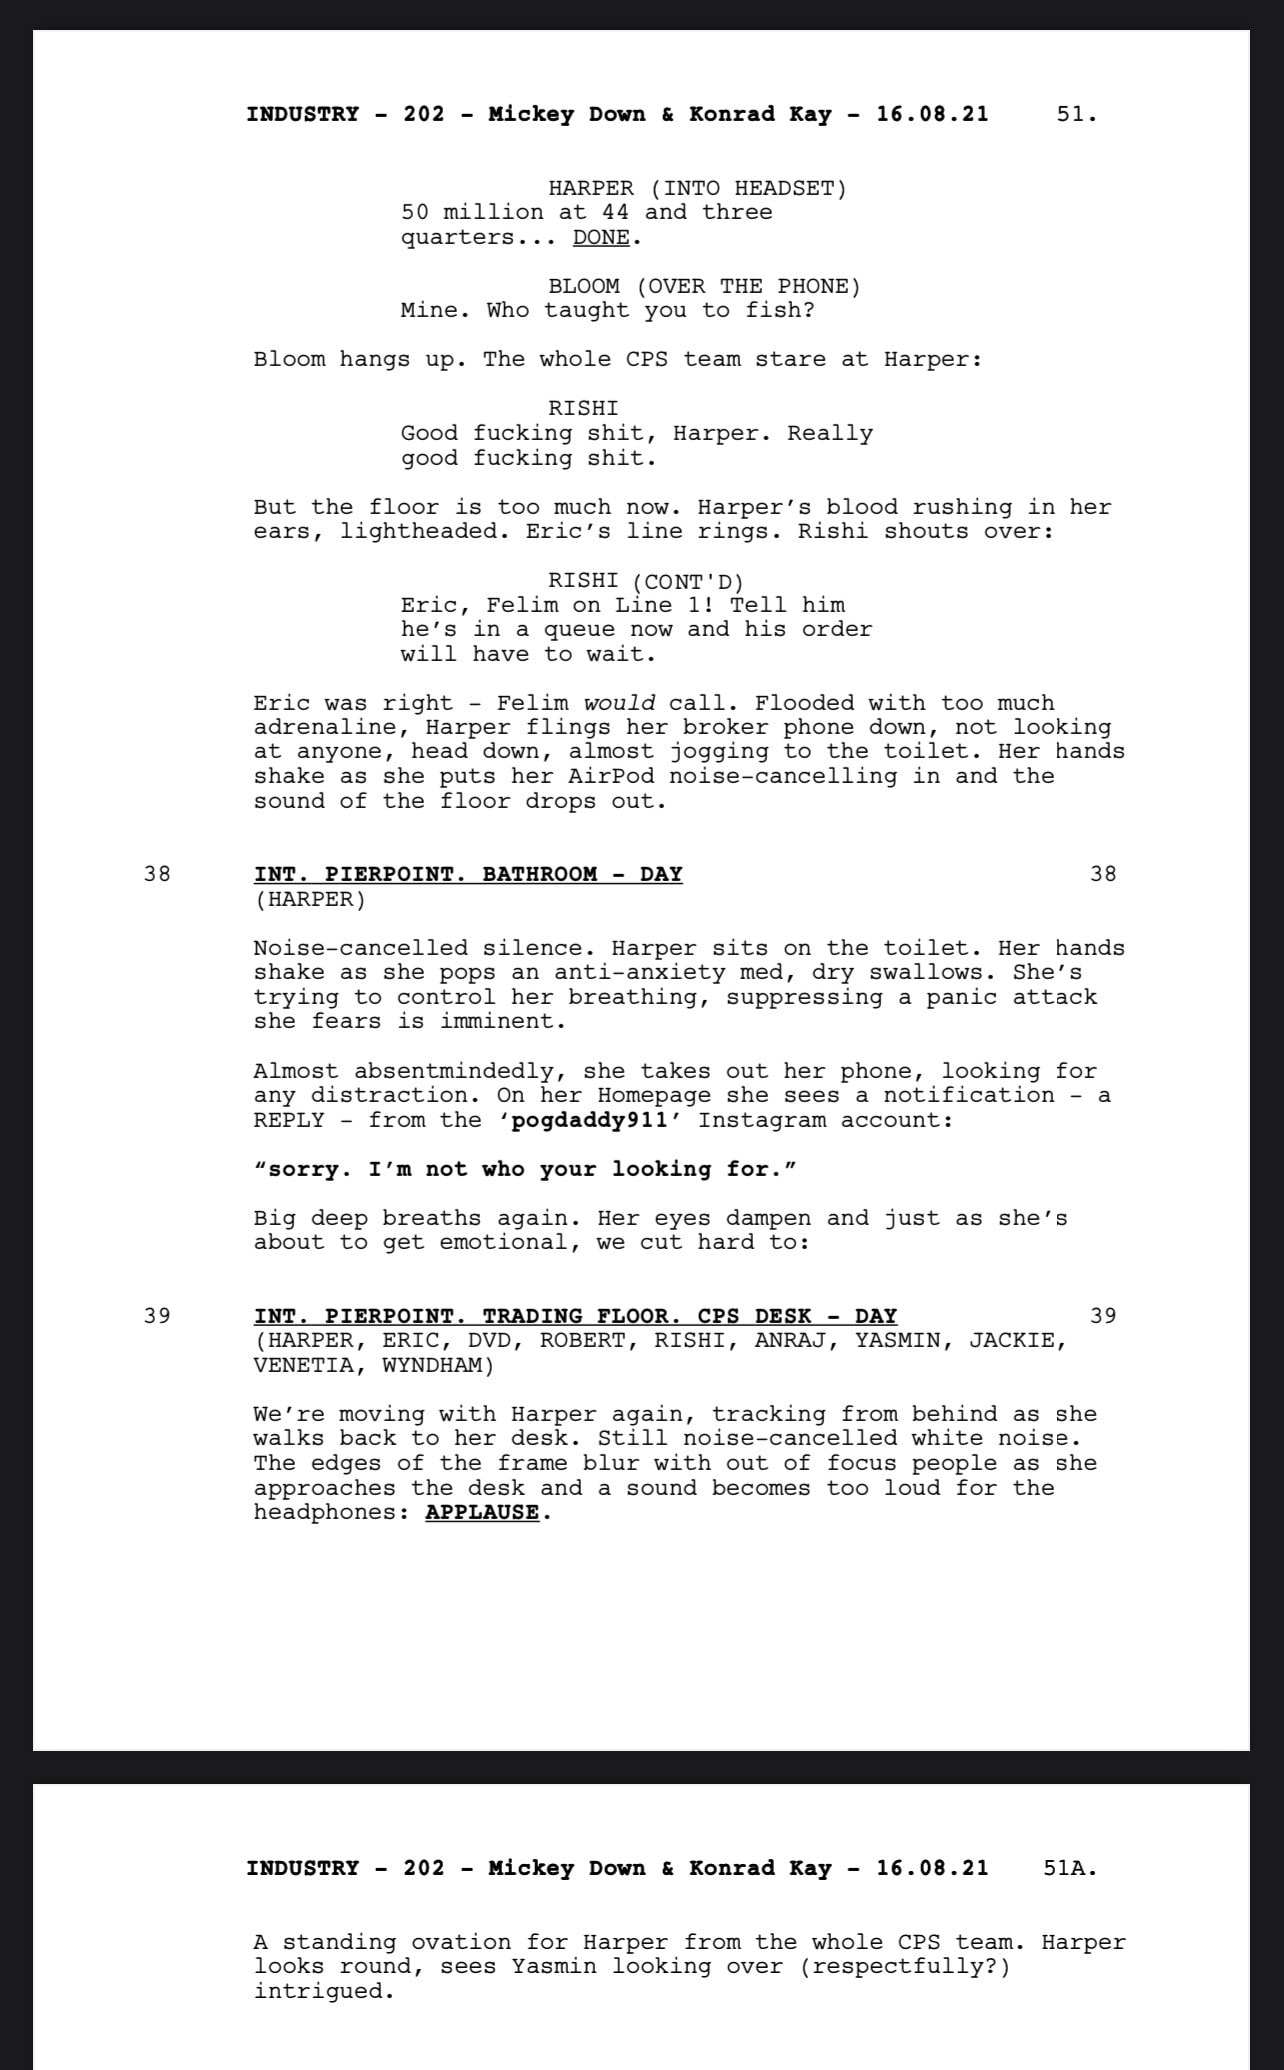 industry season 2 mickey down konrad kay interview script page 2